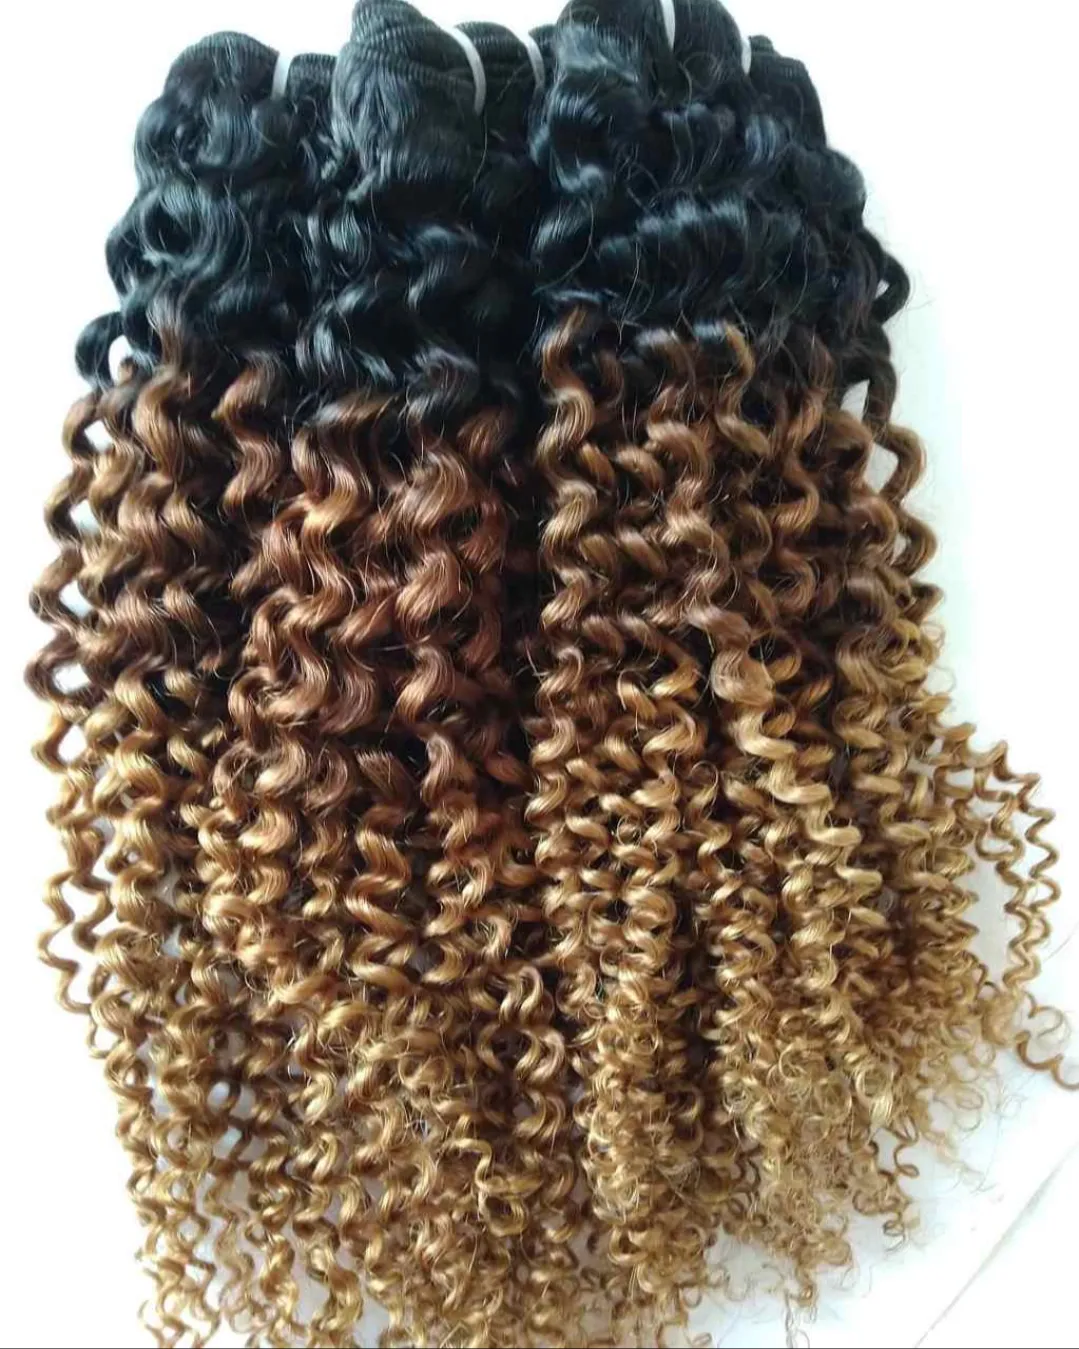 Raw Bulk Hair Straight Wavy Hair Vendors Cuticle Aligned Human Hair Curly Indian for Braiding Unprocessed Virgin Natural Top